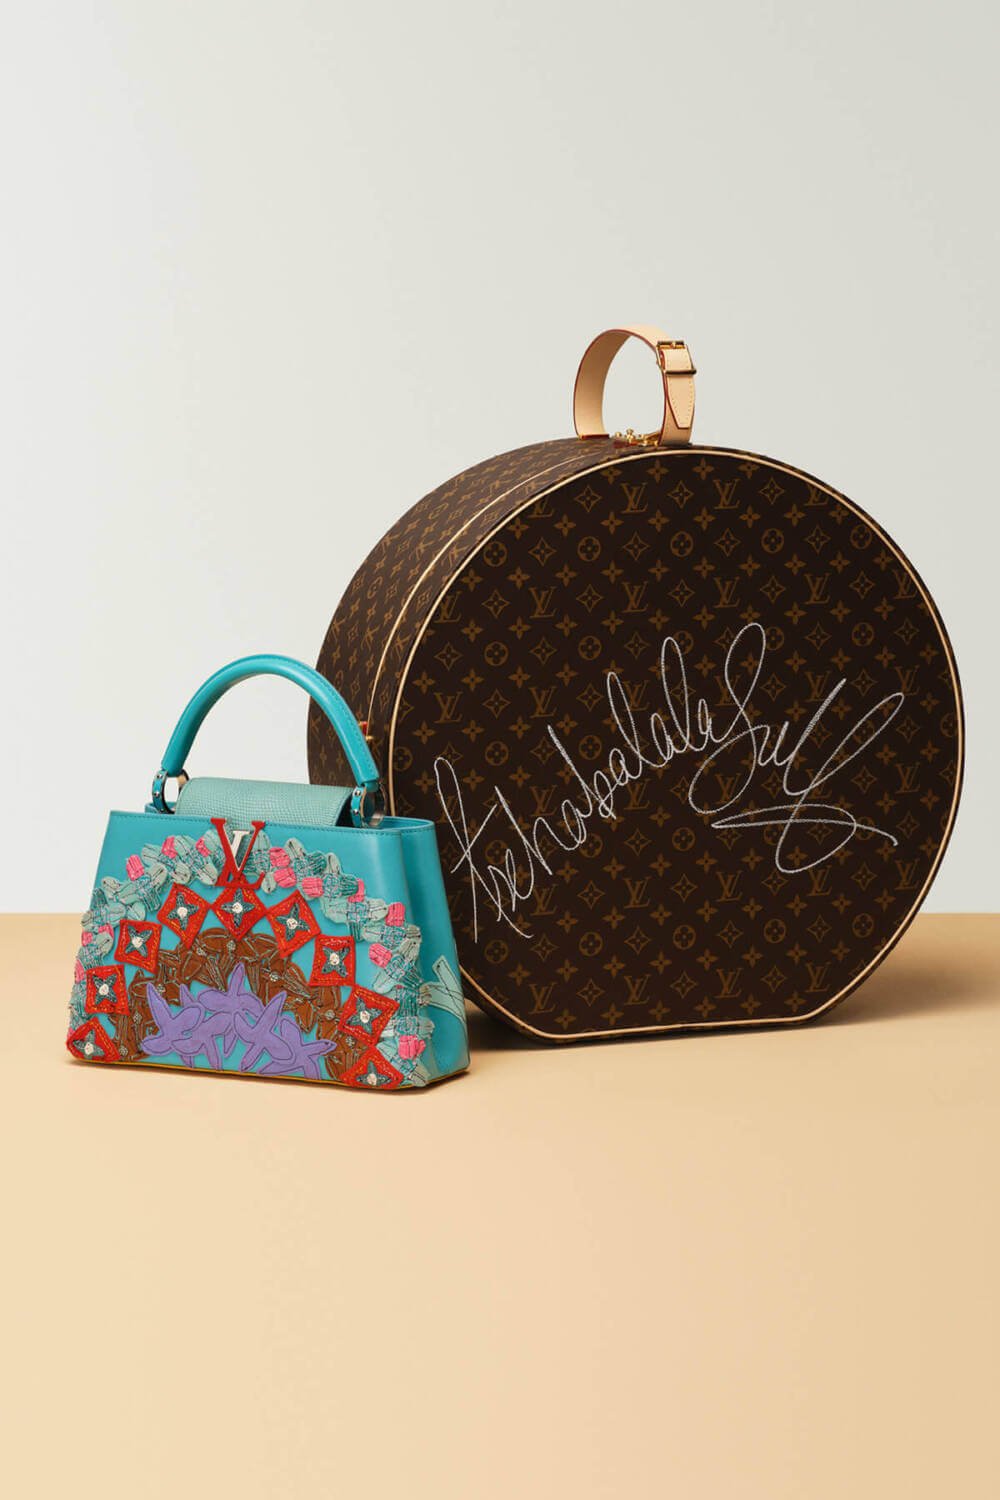 Look: Louis Vuitton's Capucines Handbags Inspired By the Little Mermaid